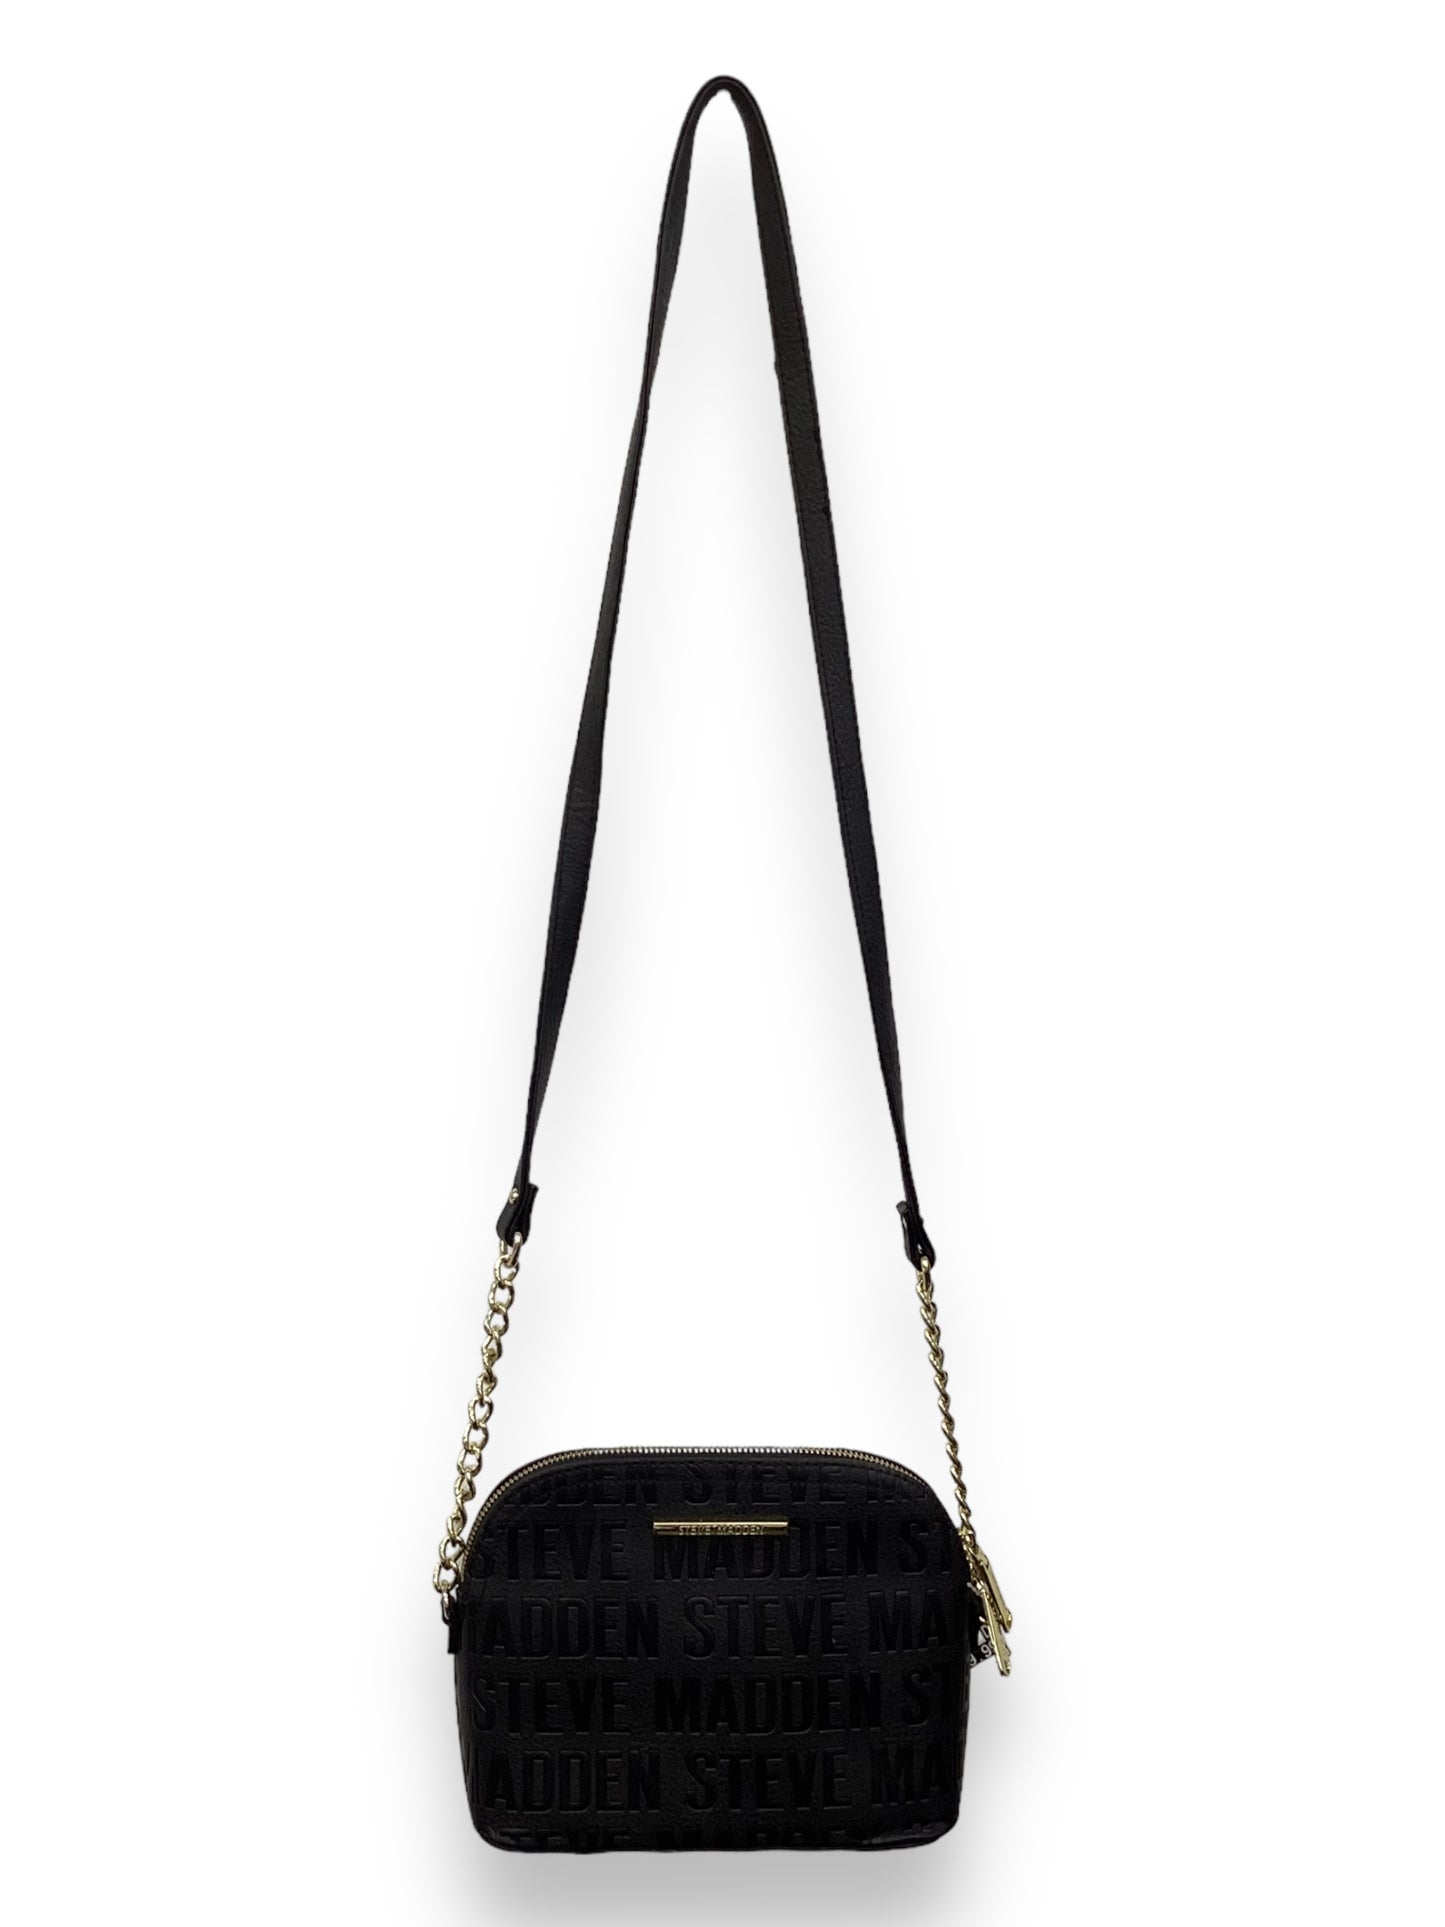 Handbag By Steve Madden  Size: Small